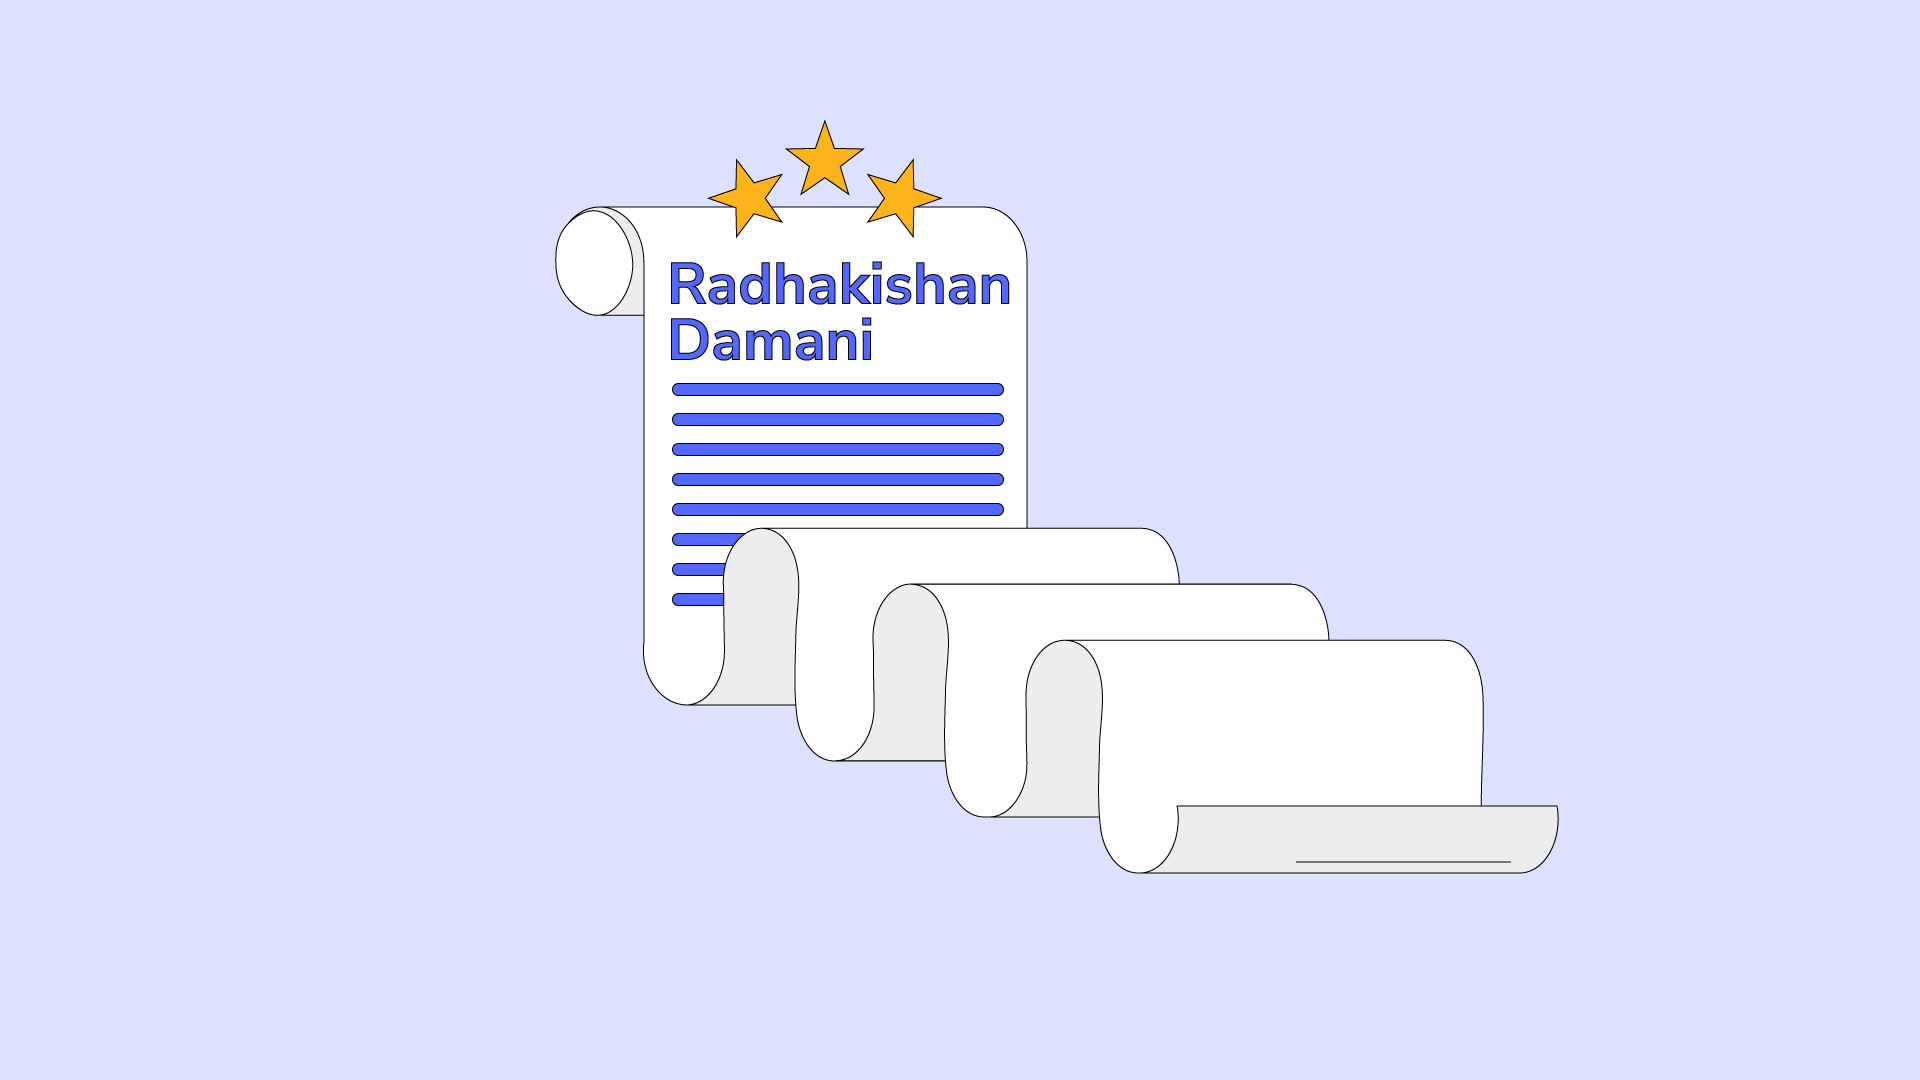 Radhakishan Damani's Portfolio Analysis